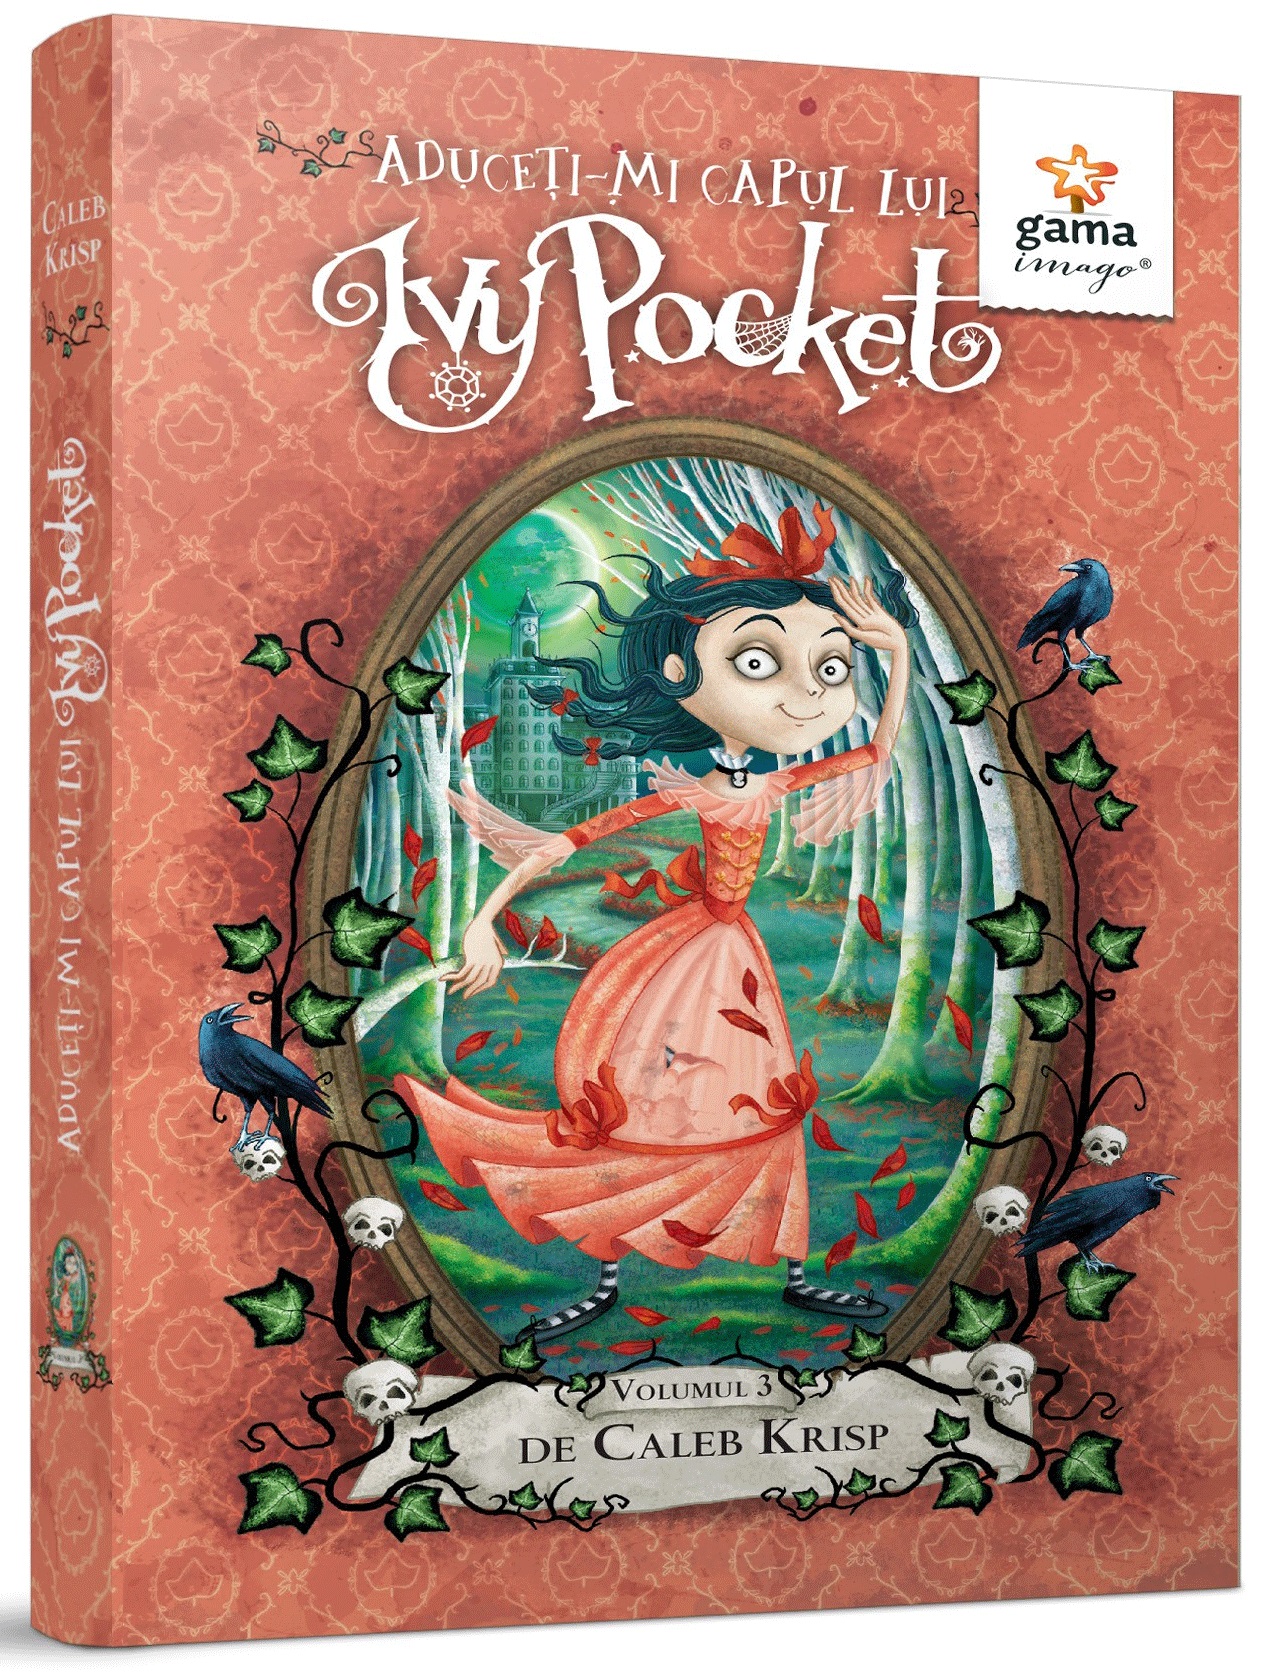 Aduceti-mi capul lui Ivy Pocket – Volumul 3 | Caleb Krisp carturesti.ro poza bestsellers.ro